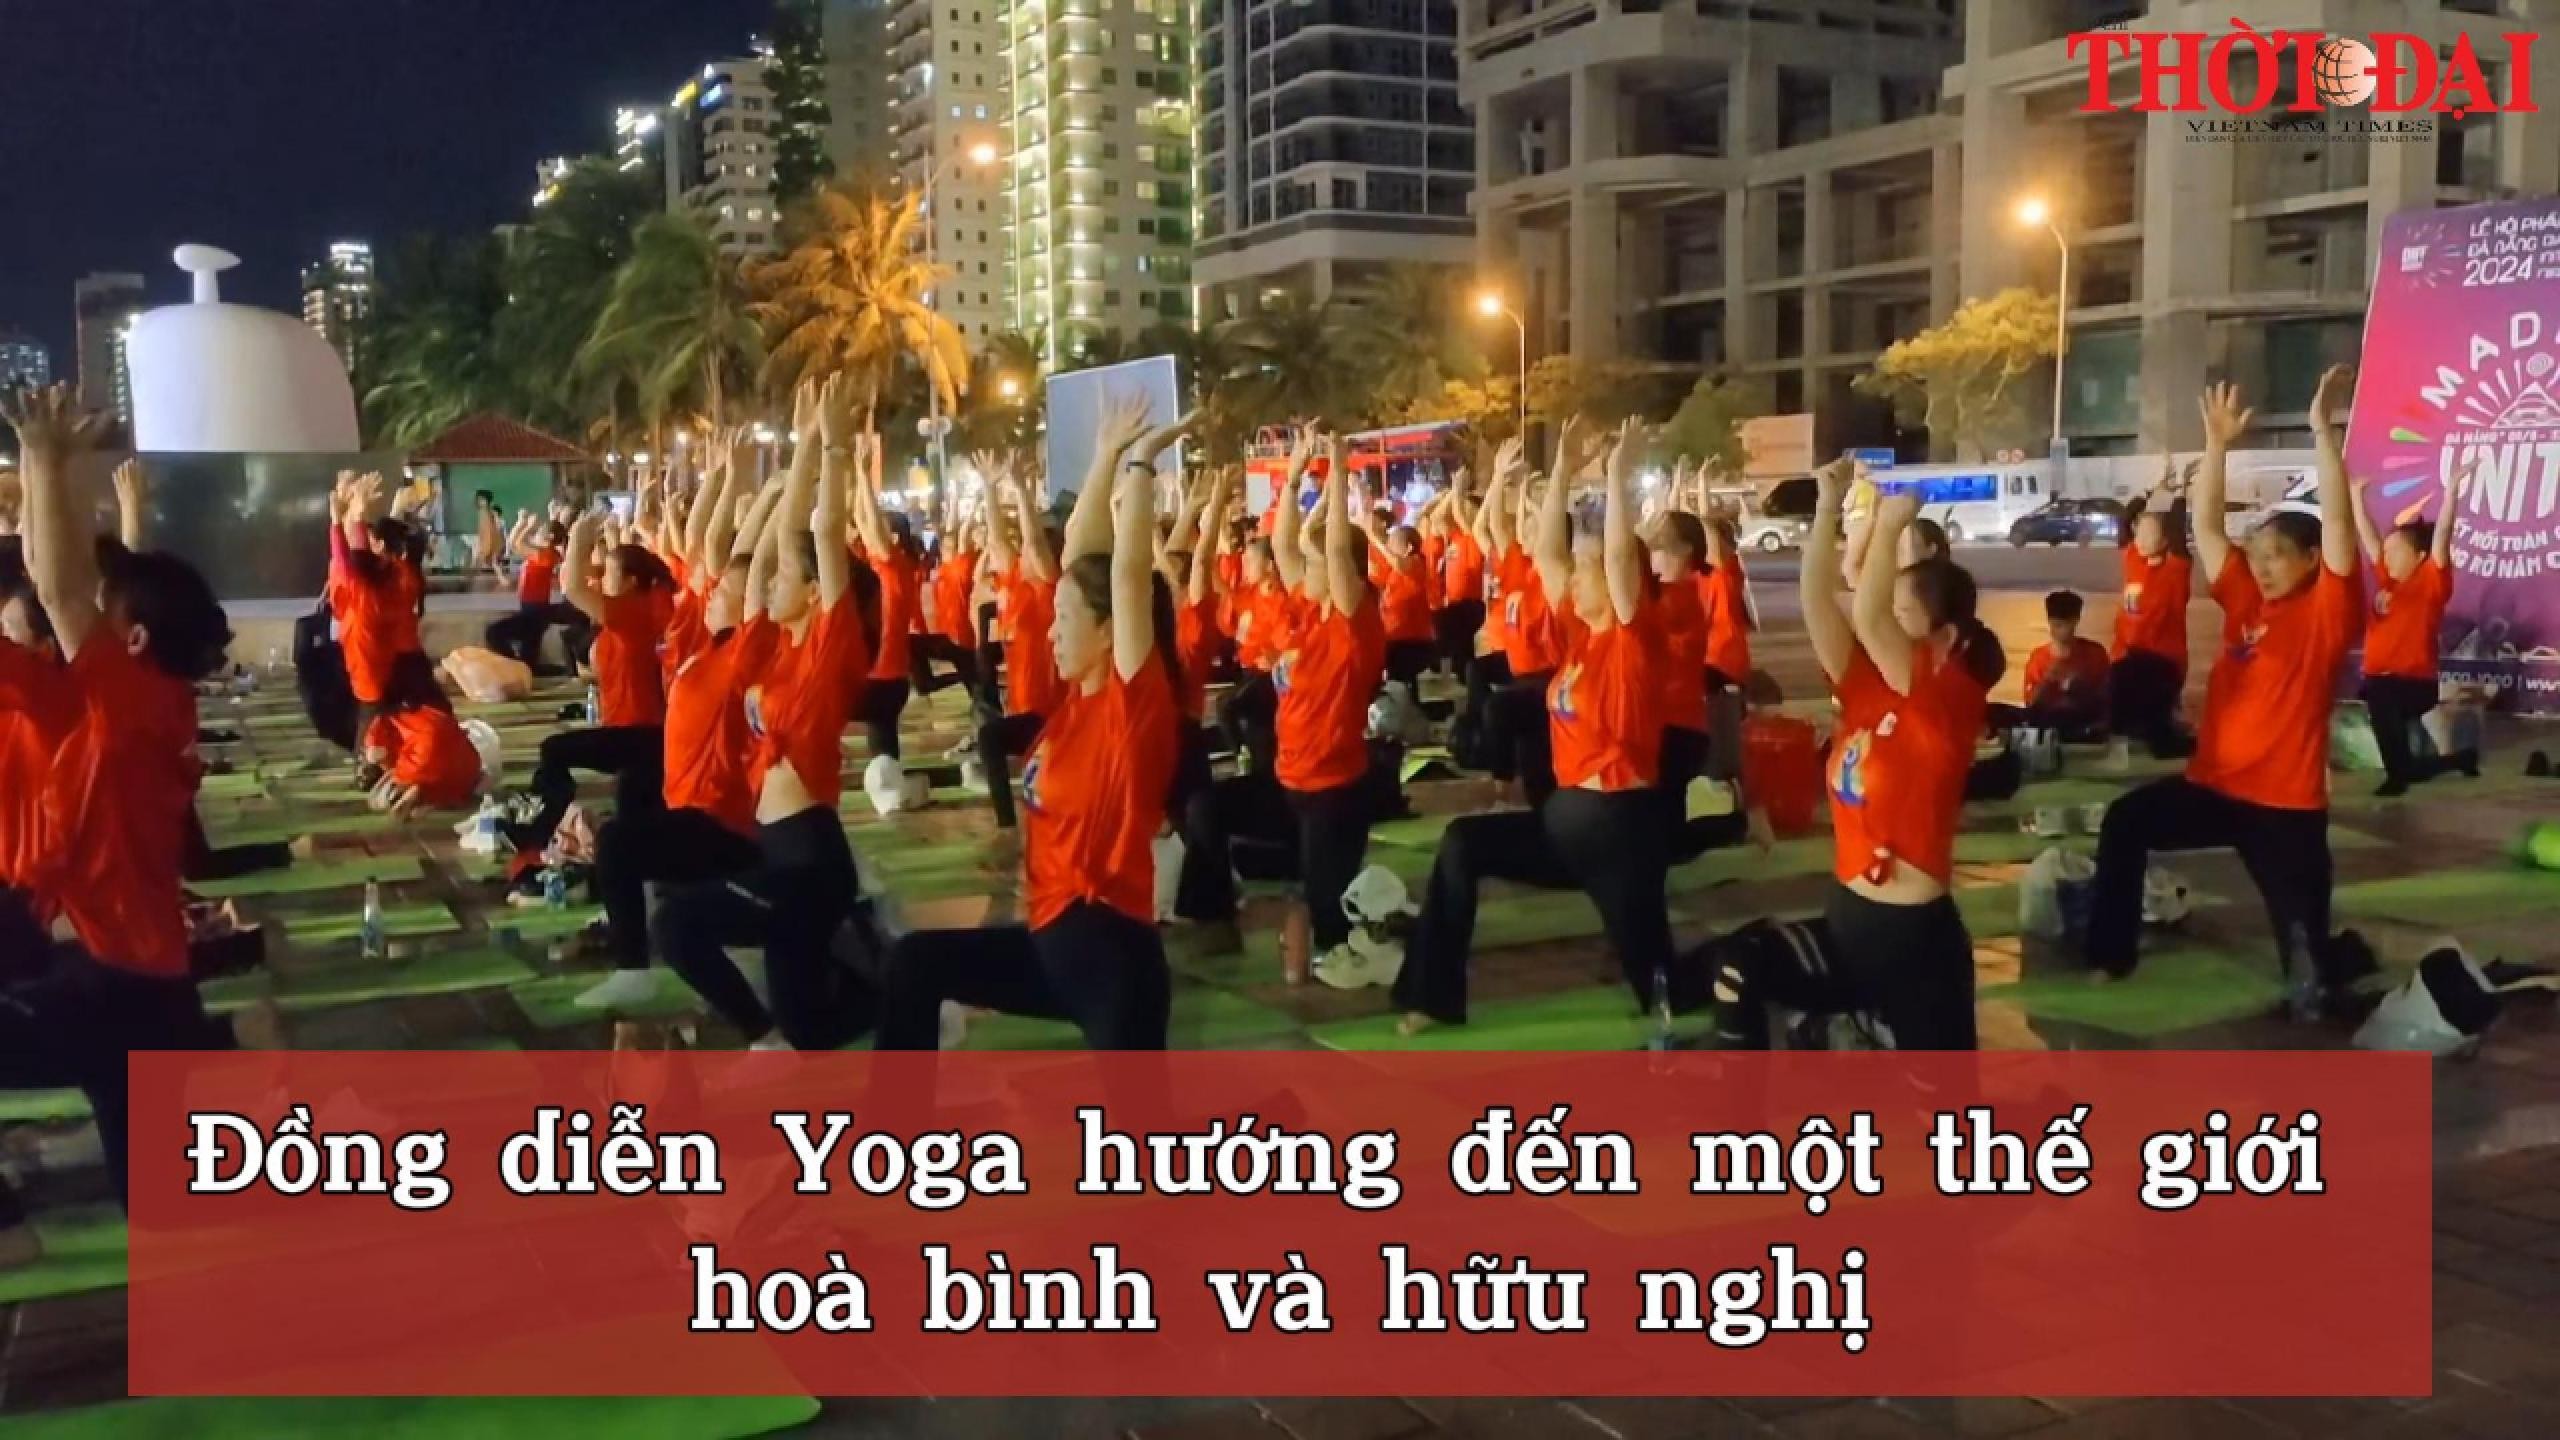 dong dien yoga huong den mot the gioi hoa binh va huu nghi